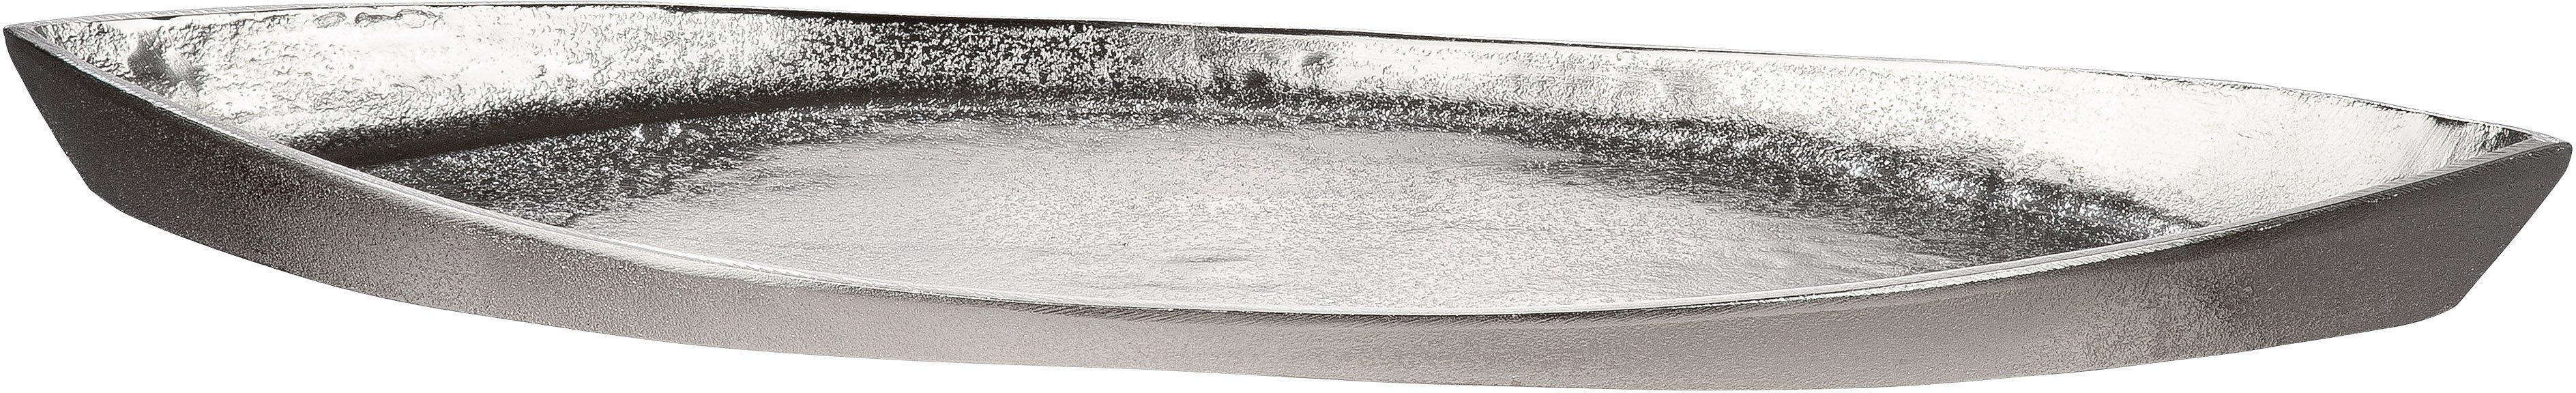 GILDE Schale Boat, Alumimium, (1-tlg), Antik-Finish, silberfarbene Struktur, ideal zum Dekorieren | Schüsseln